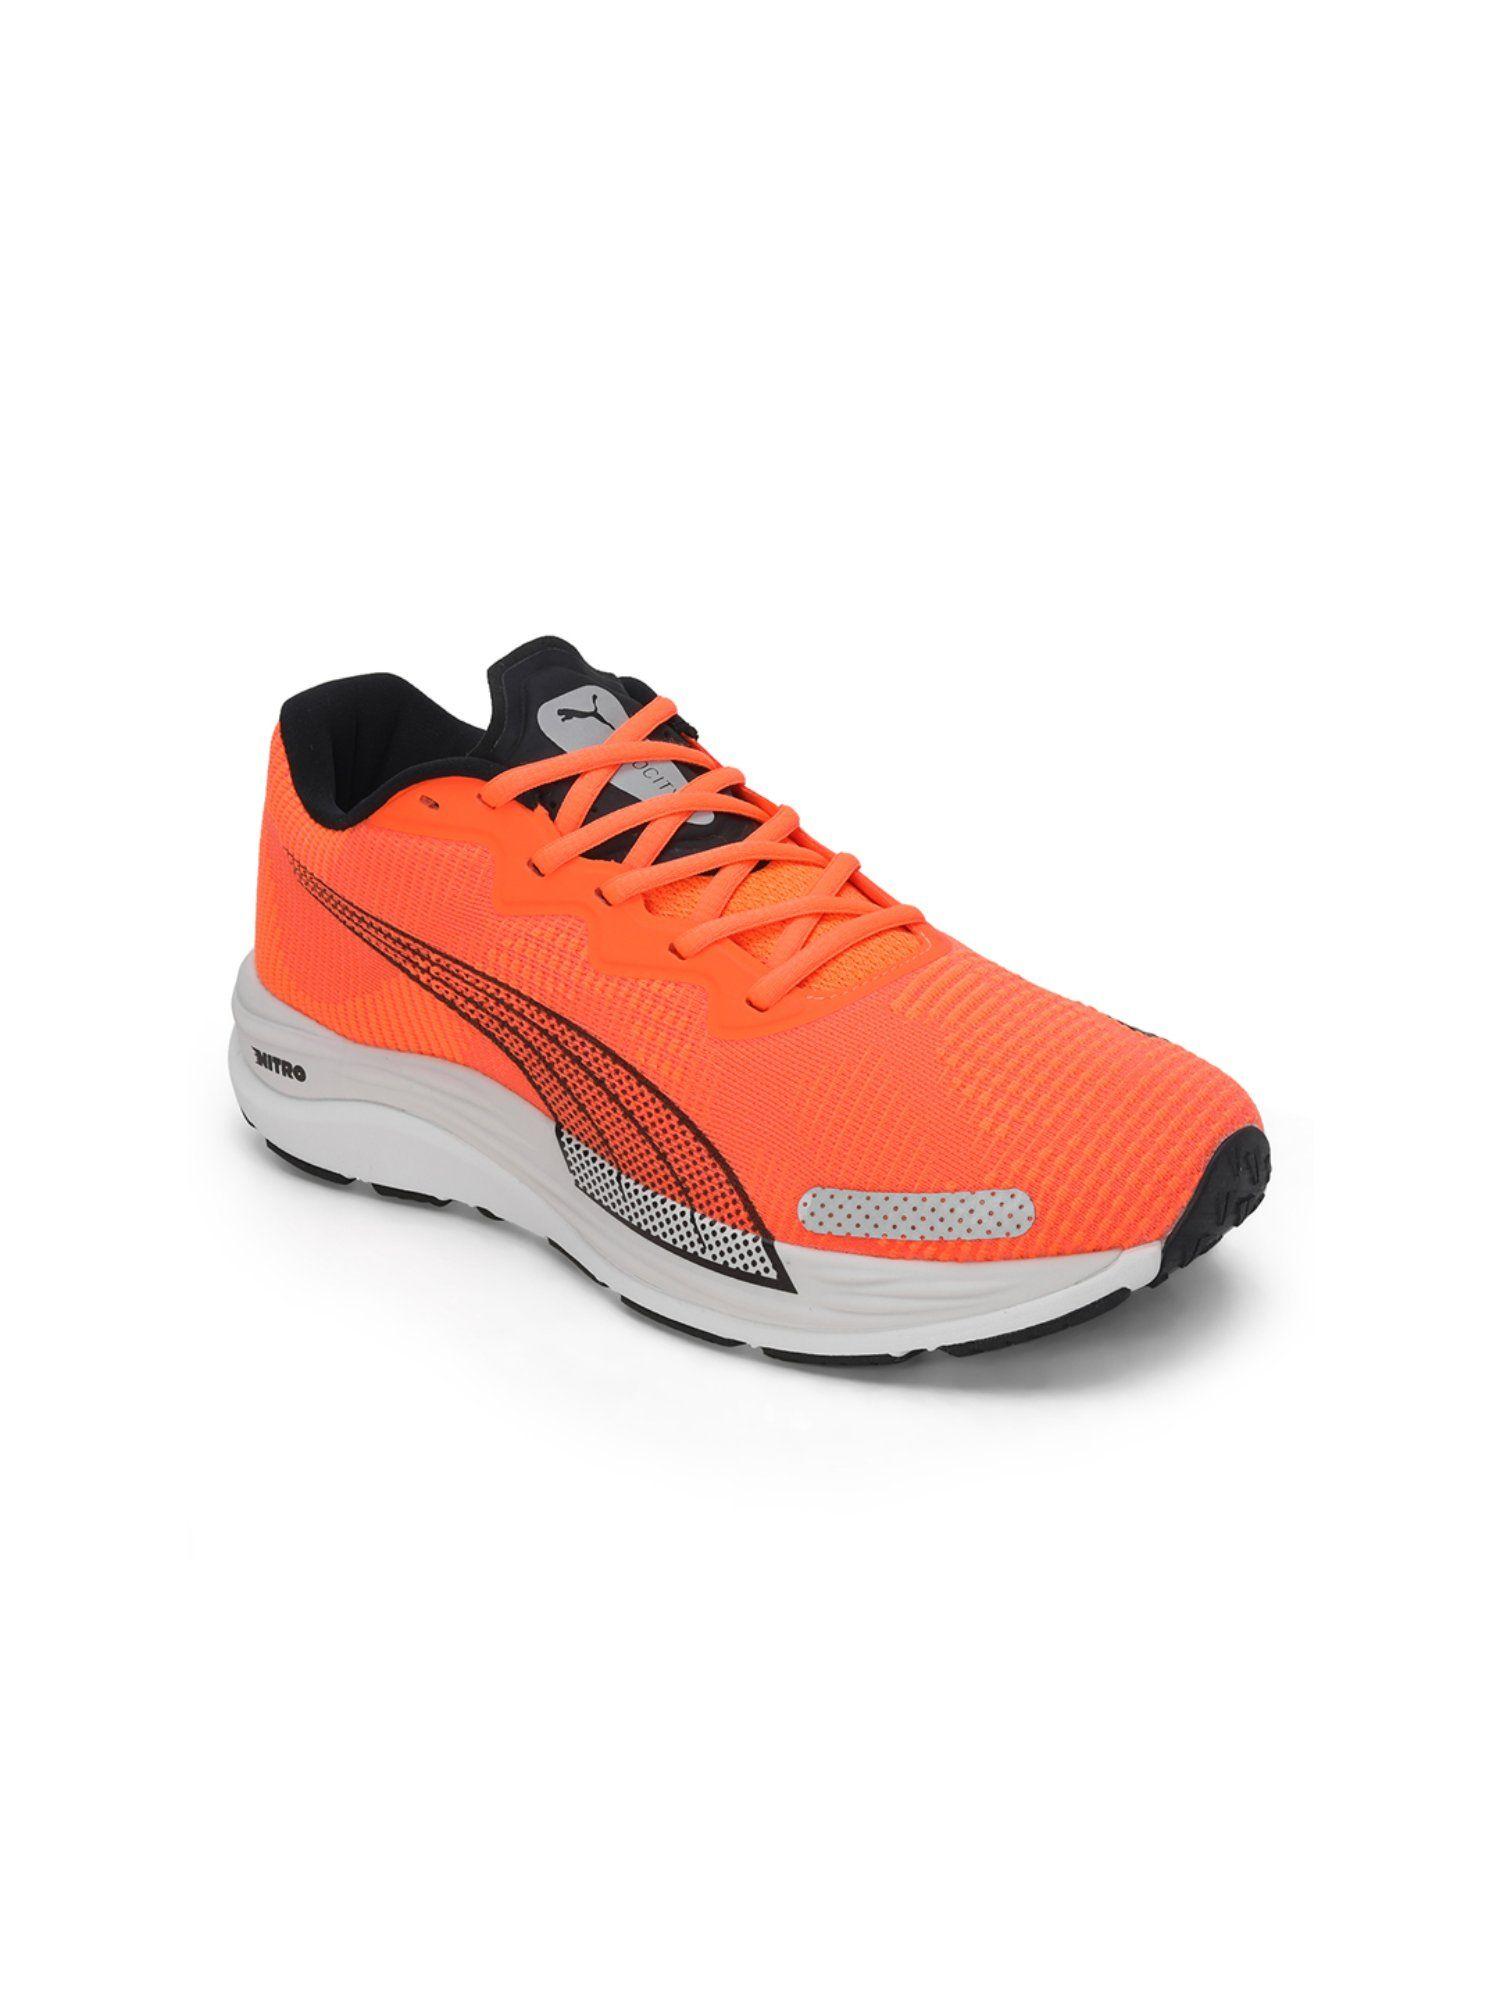 velocity nitro 2 fade men's orange running shoes